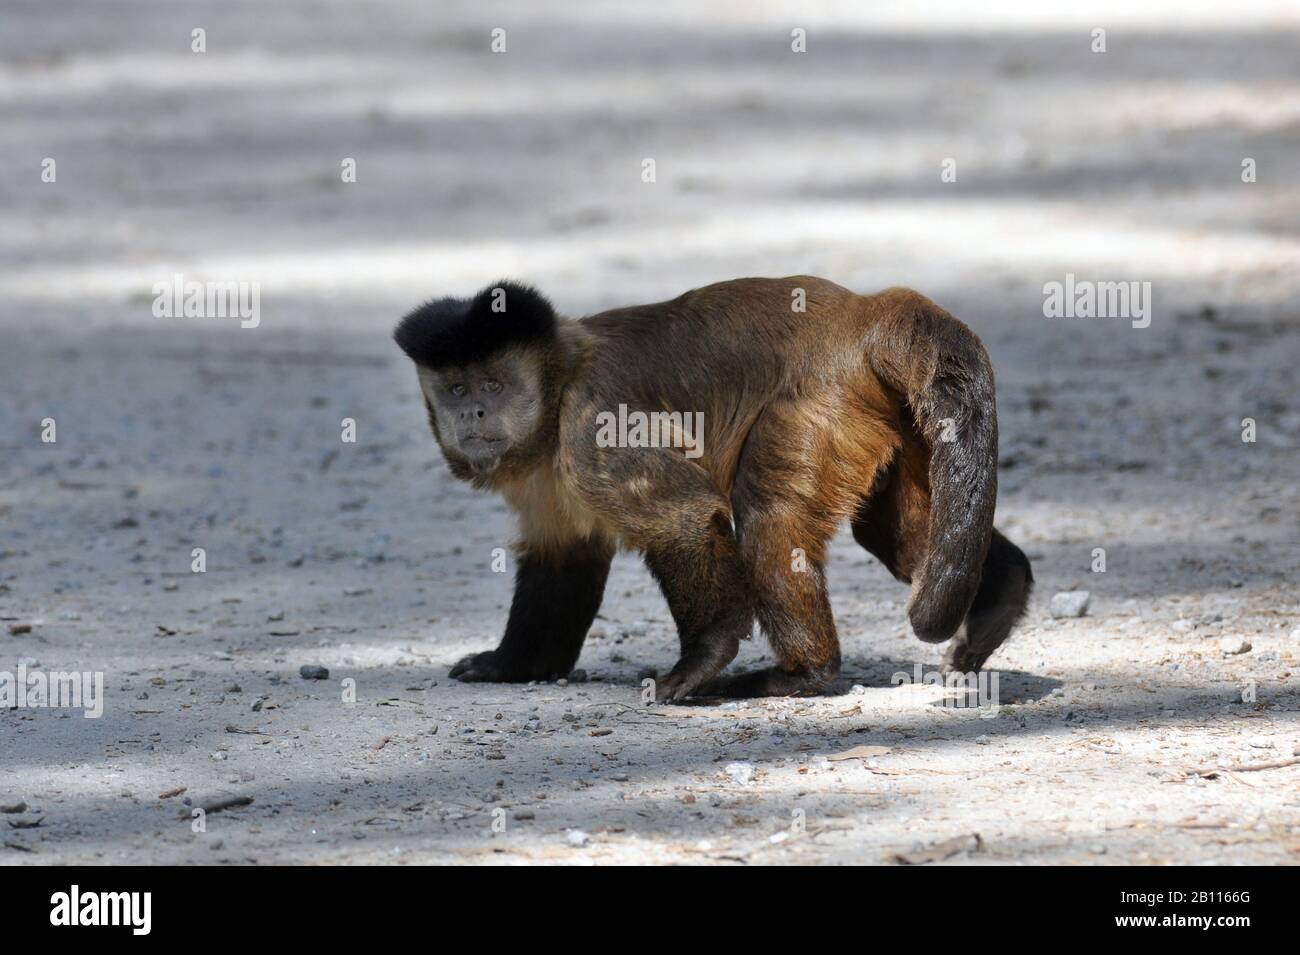 Black-Capped Capuchin, Brown-Capuchin Monkey (Cebus apella), walks on the ground, Brazil, Pantanal Stock Photo